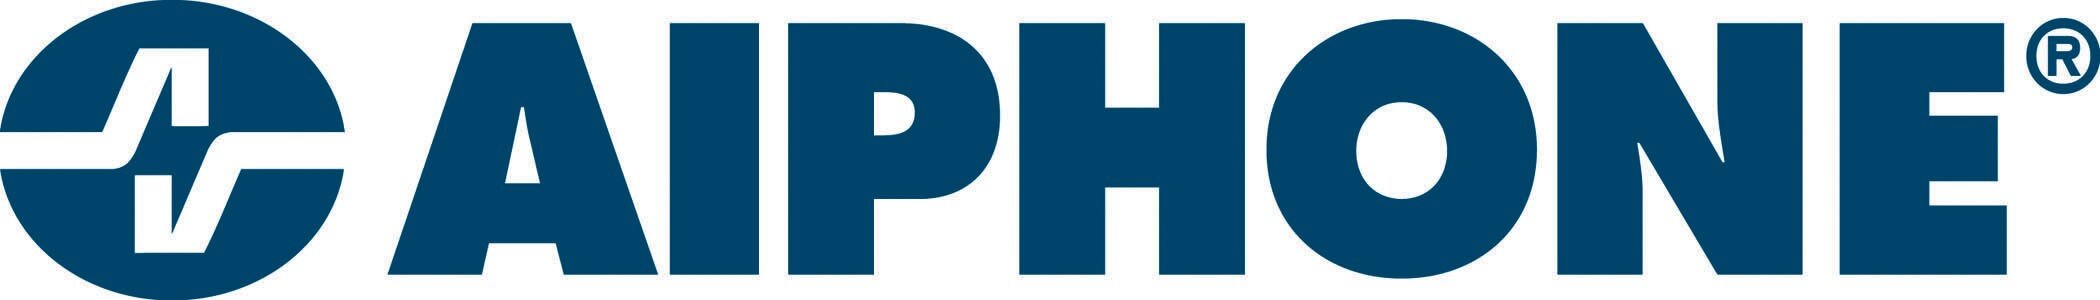 Aiphone logo.jpg